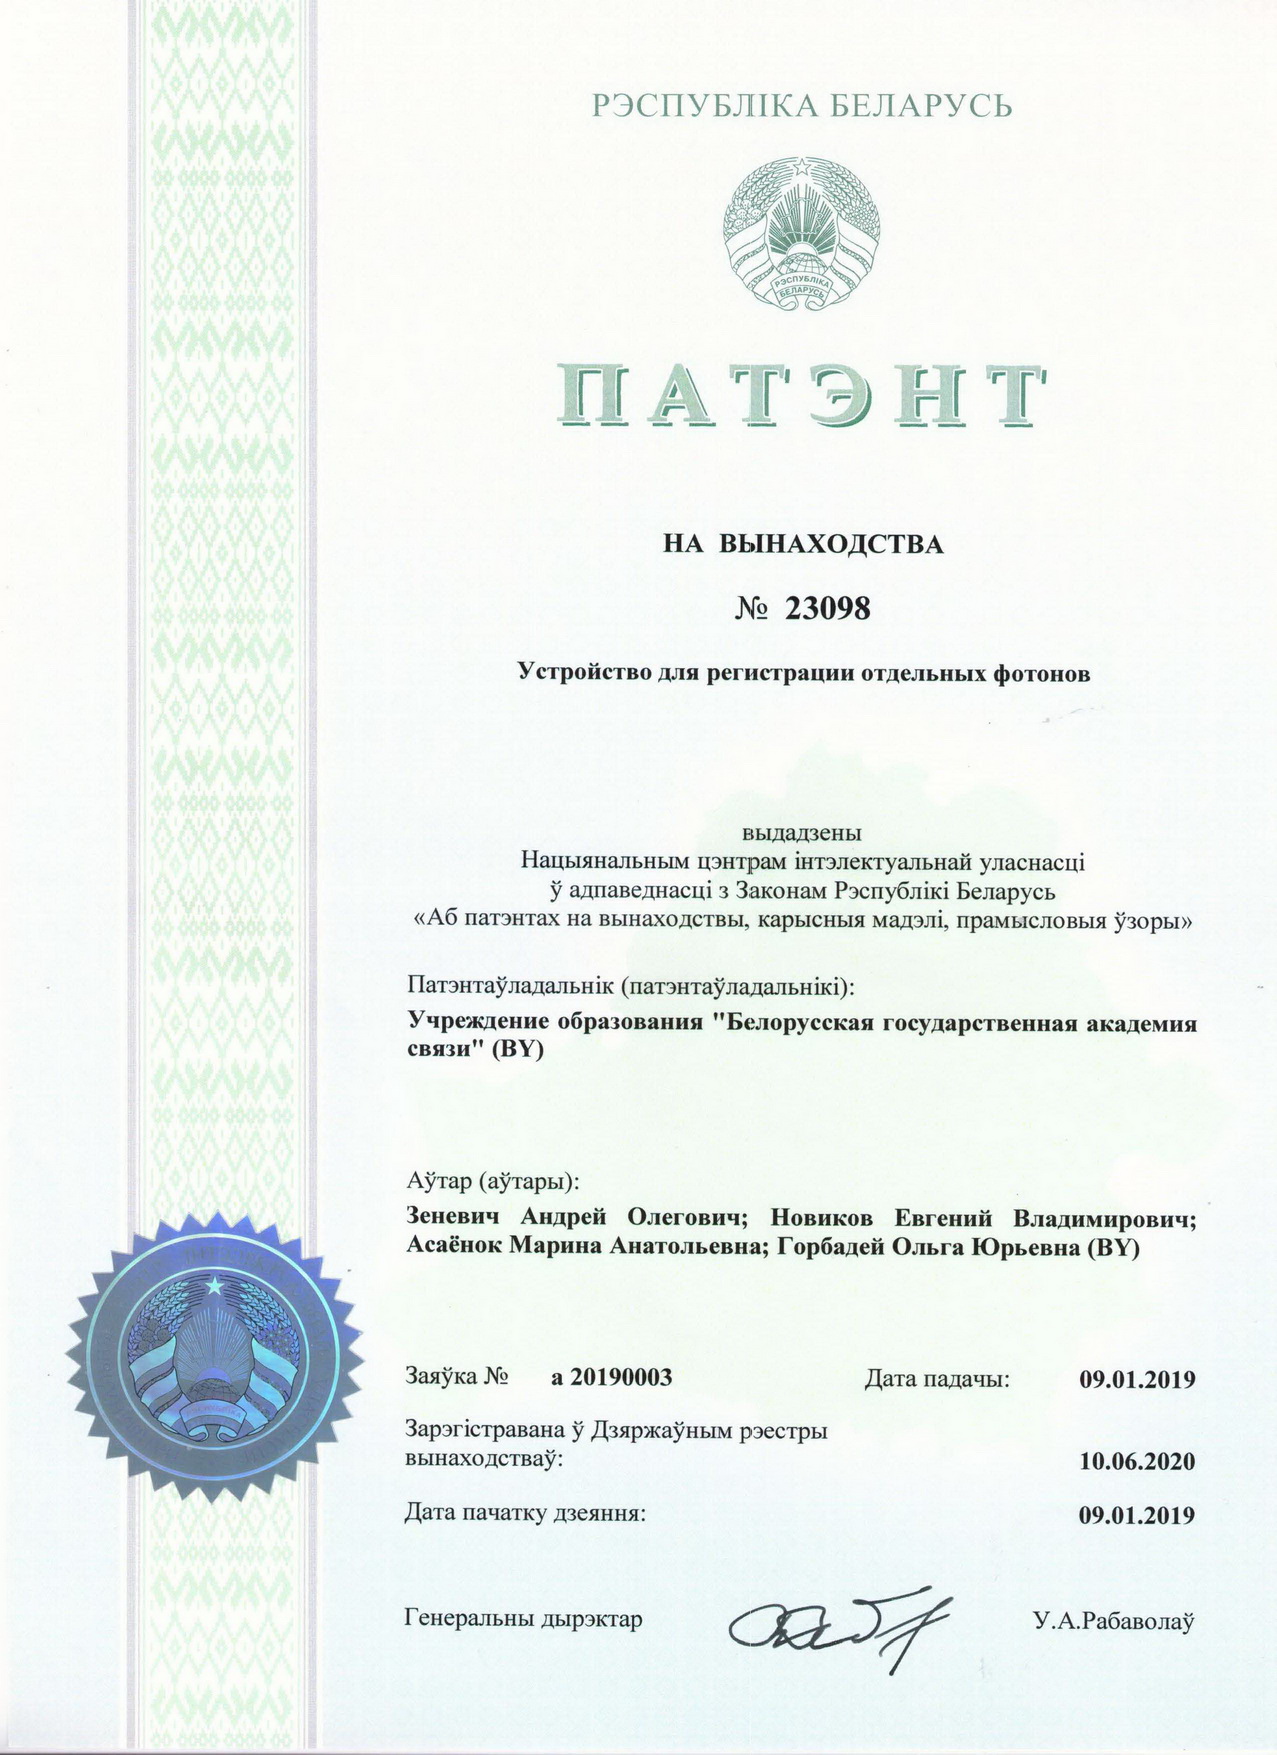 document_patent_23098.jpg